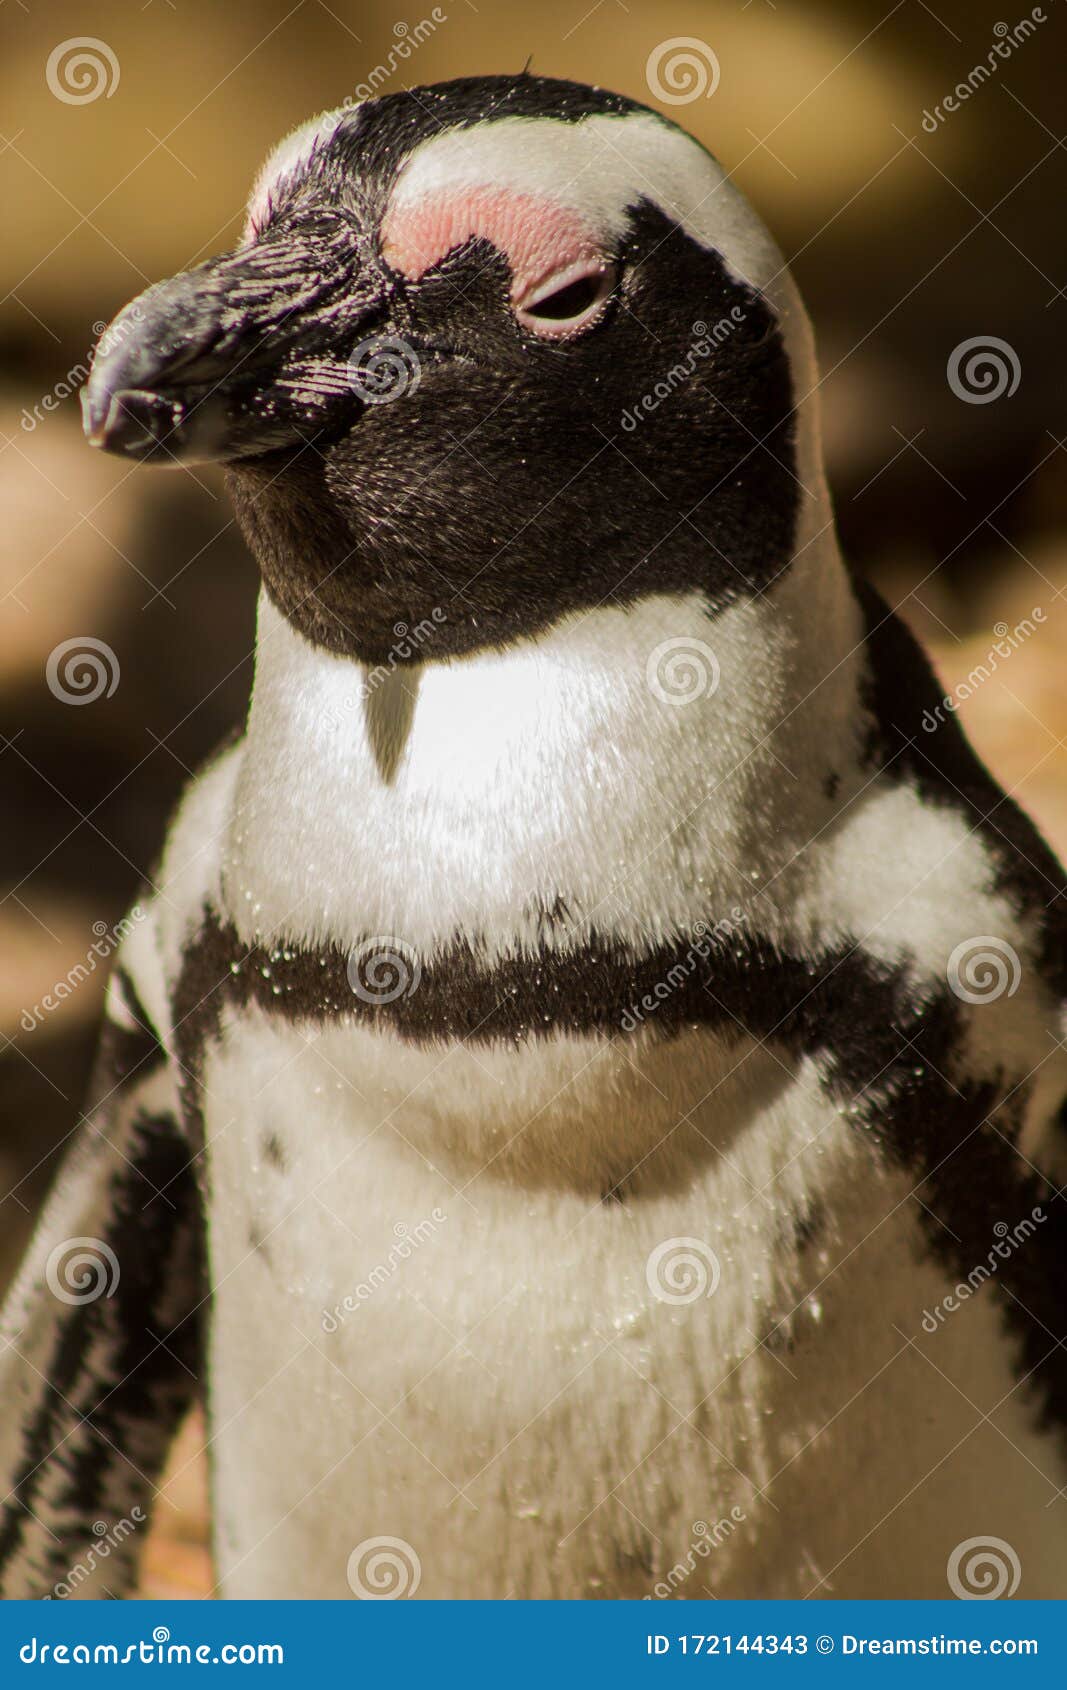 Why Do Penguins Wear Tuxedos? 